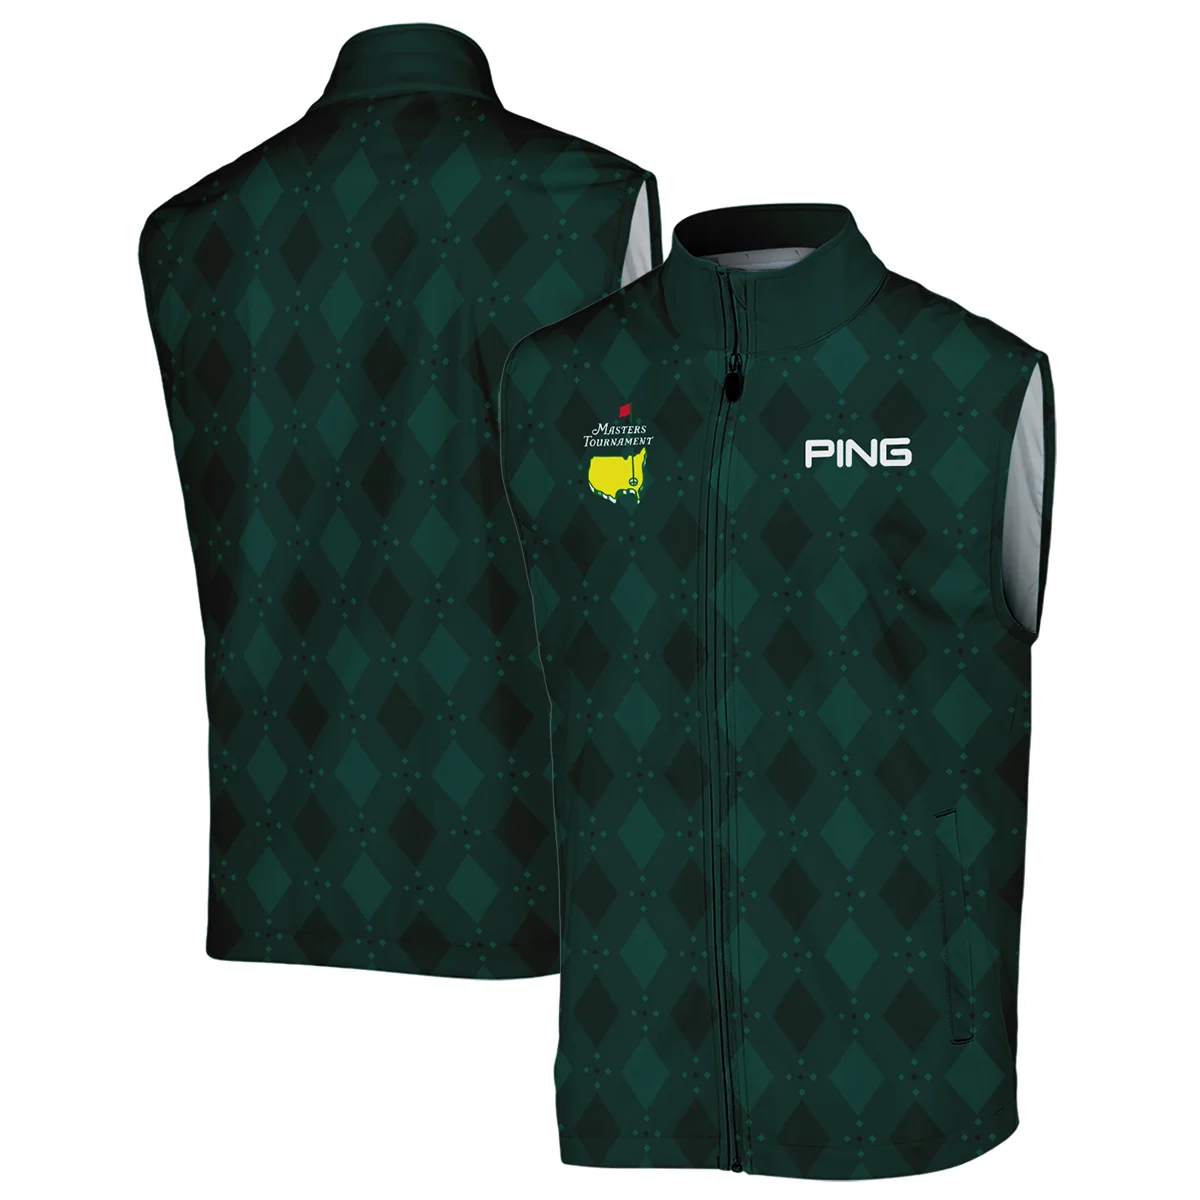 Dark Green Argyle Plaid Pattern Golf Masters Tournament Ping Zipper Polo Shirt Style Classic Zipper Polo Shirt For Men